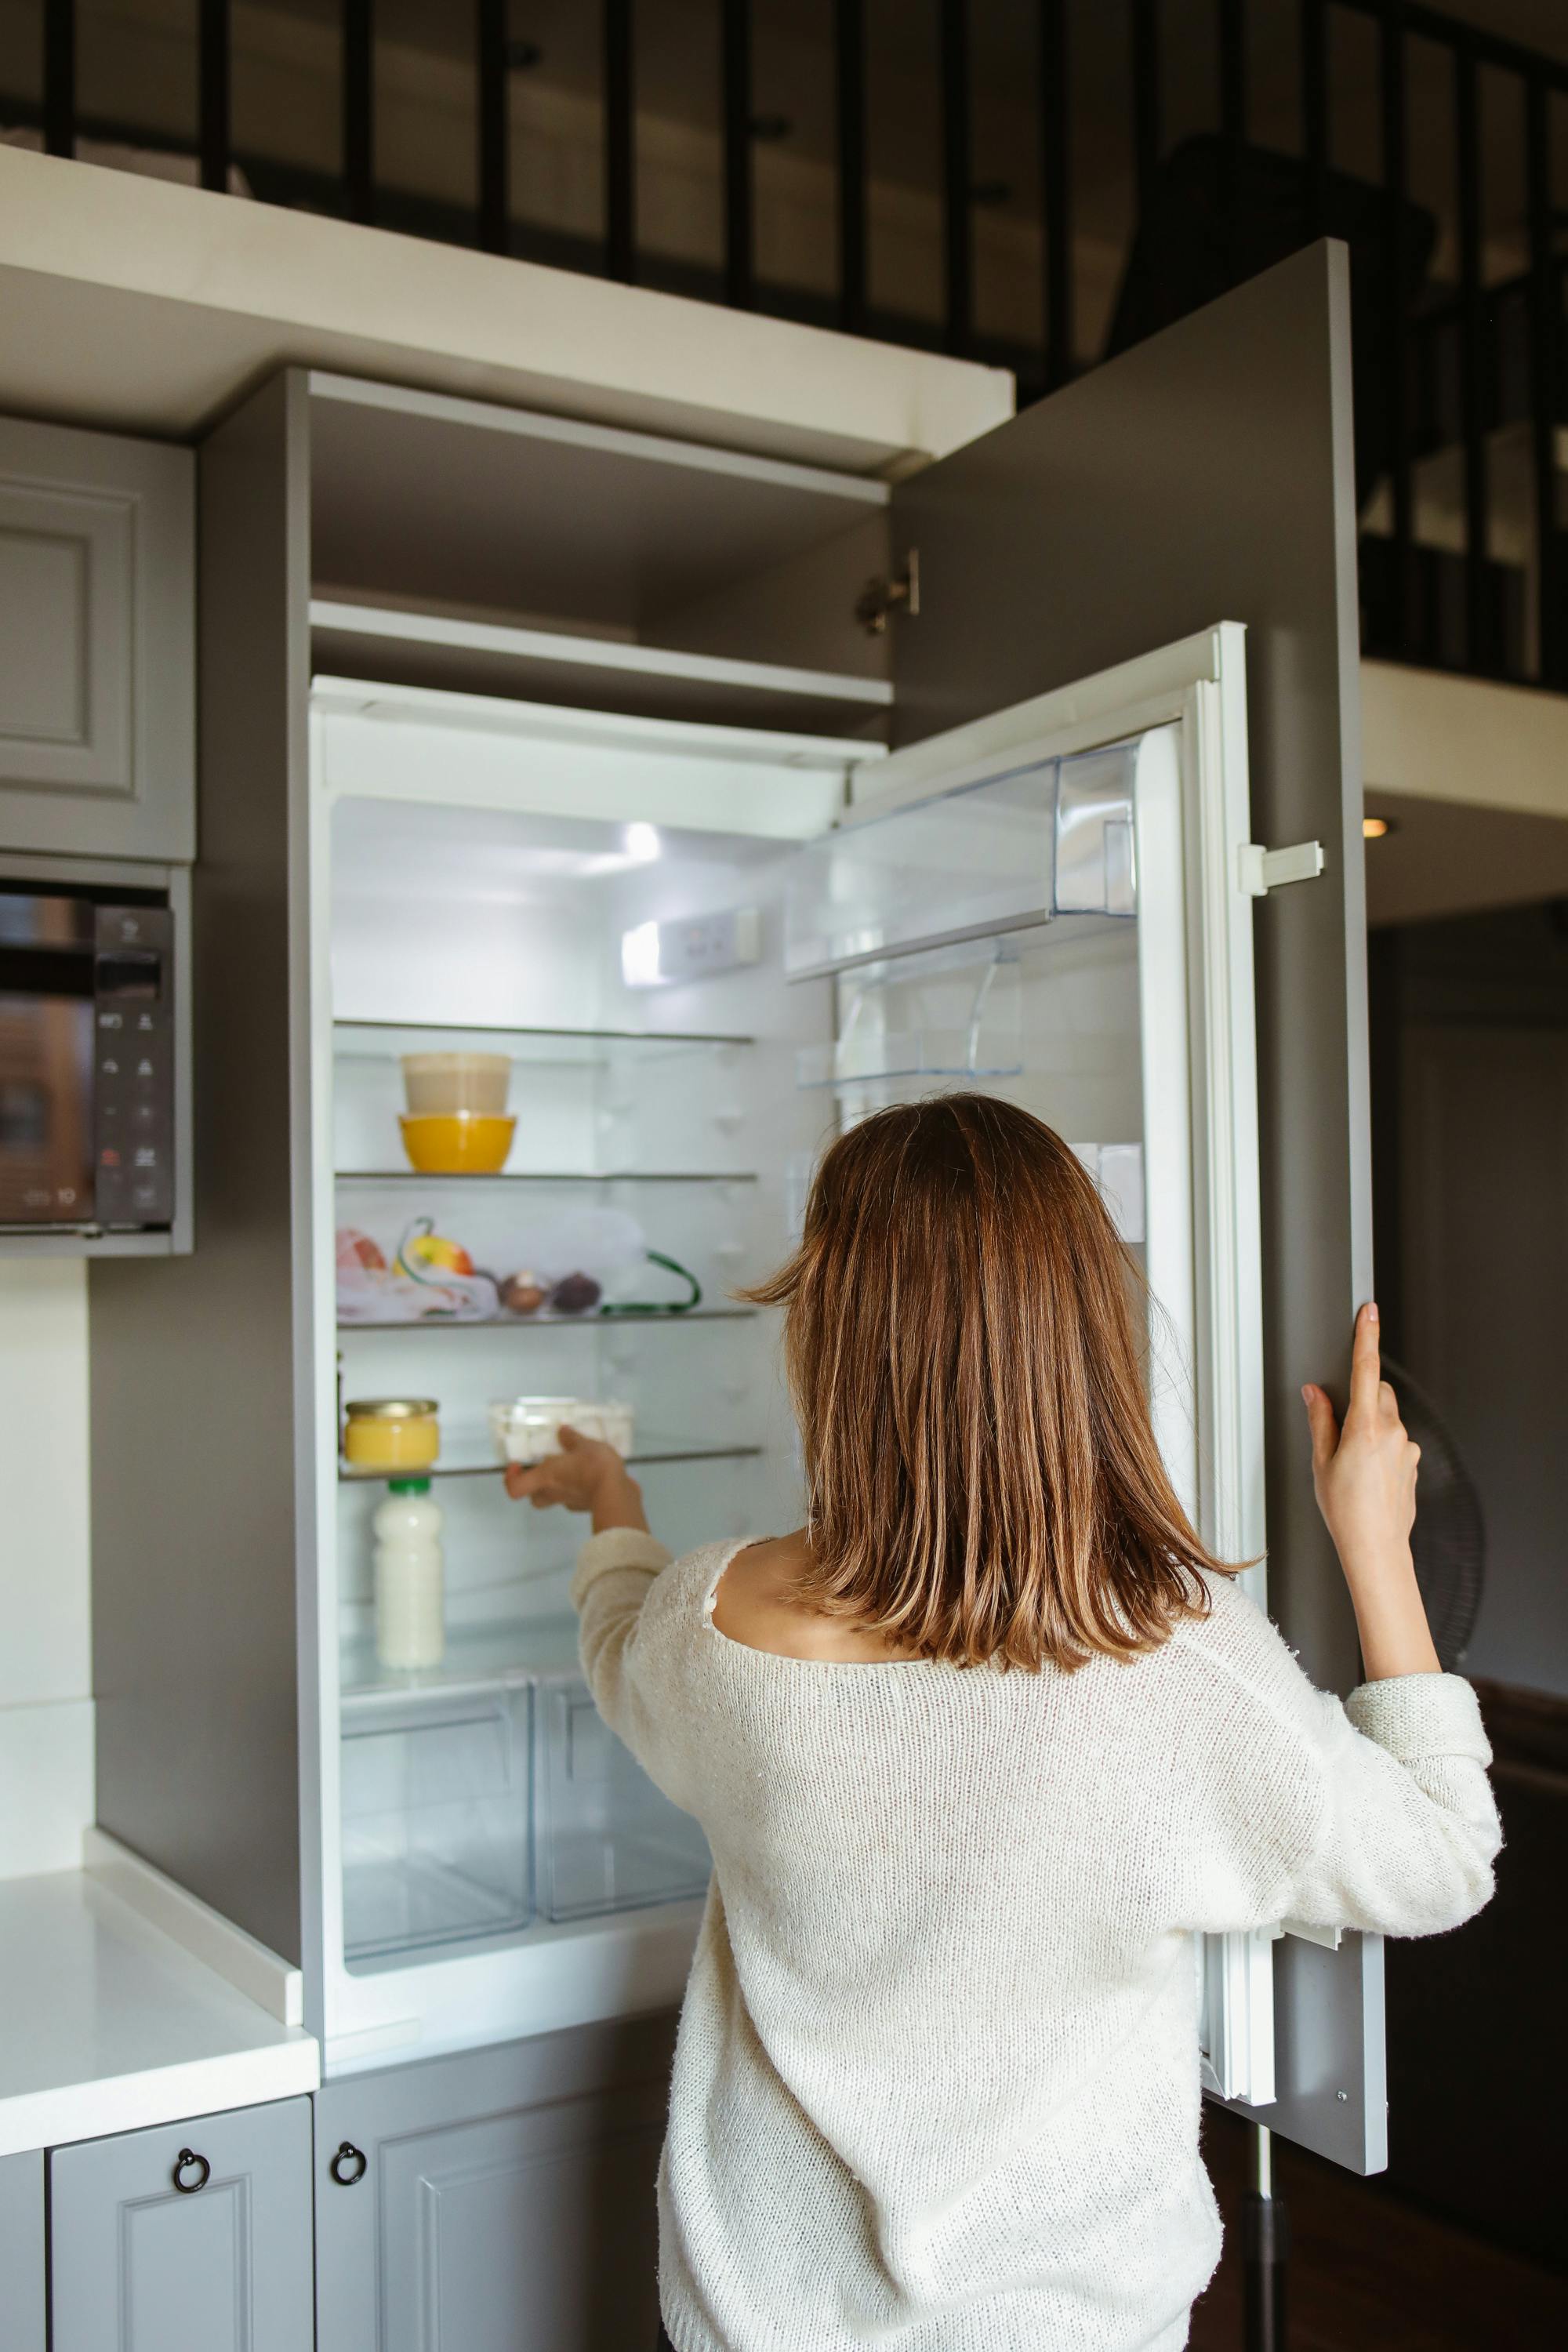 An almost empty fridge | Source: Pexels